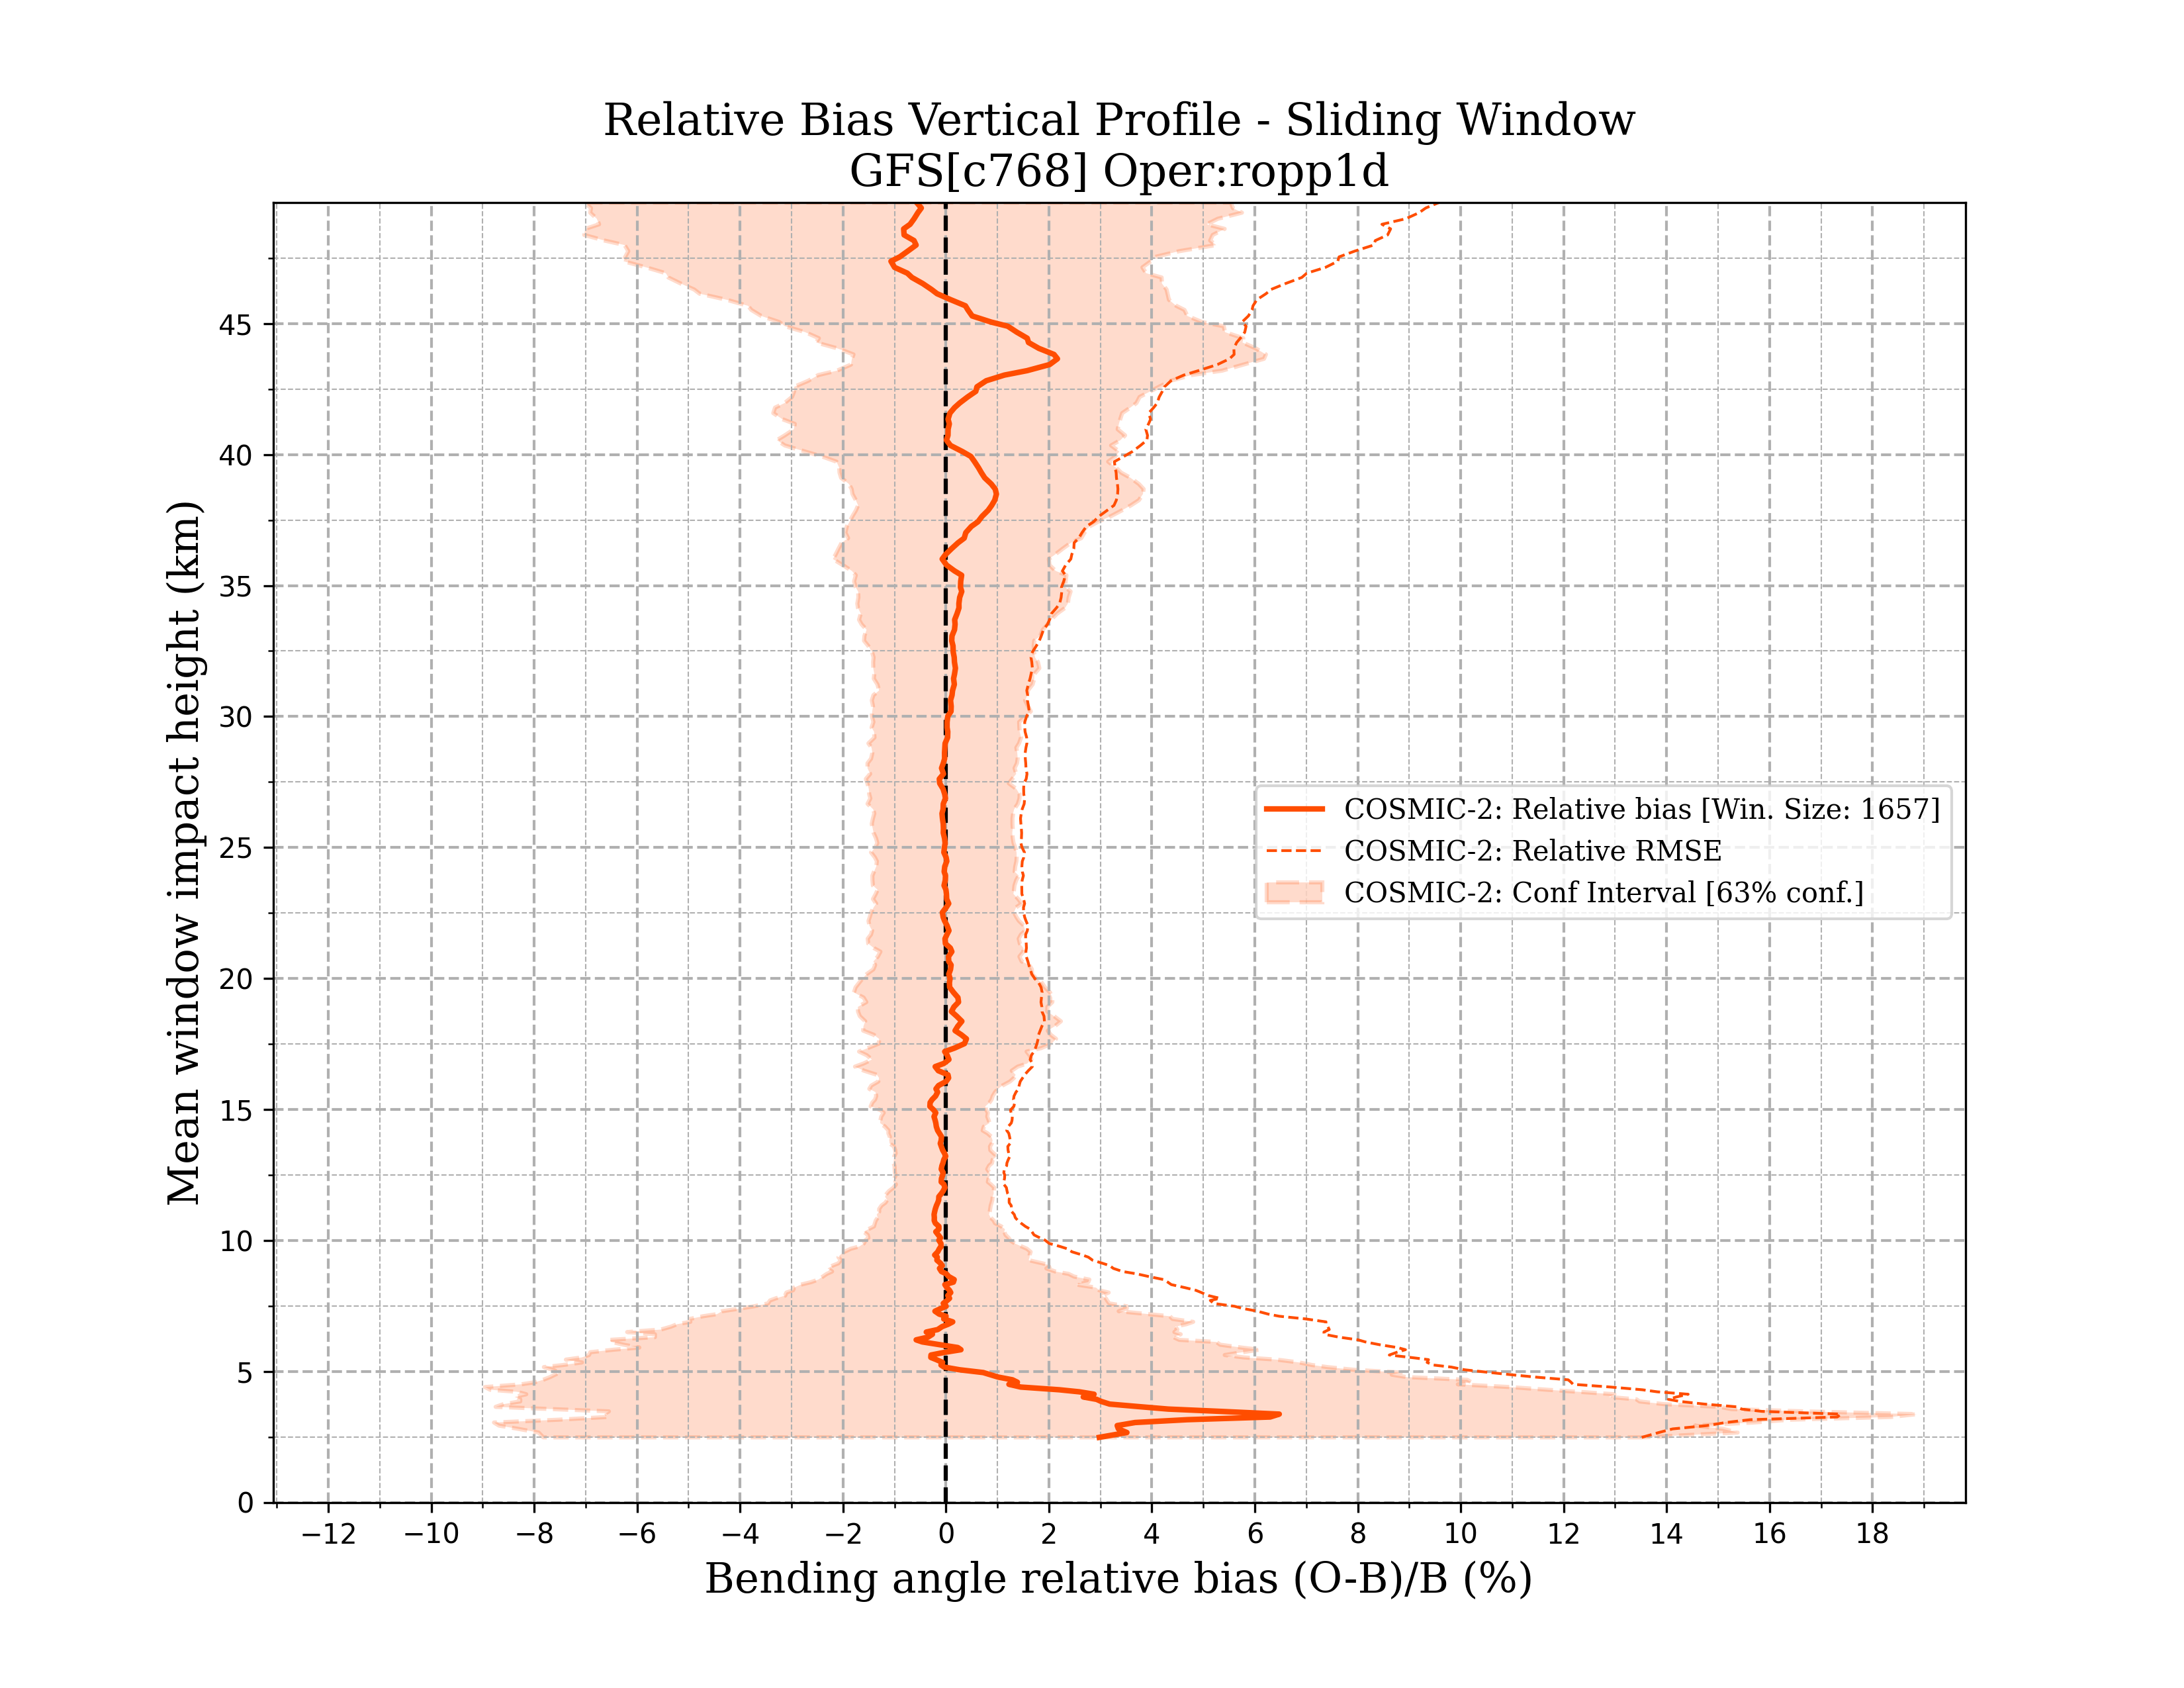 cosmic-2 ropp1d vertical_profile_sw